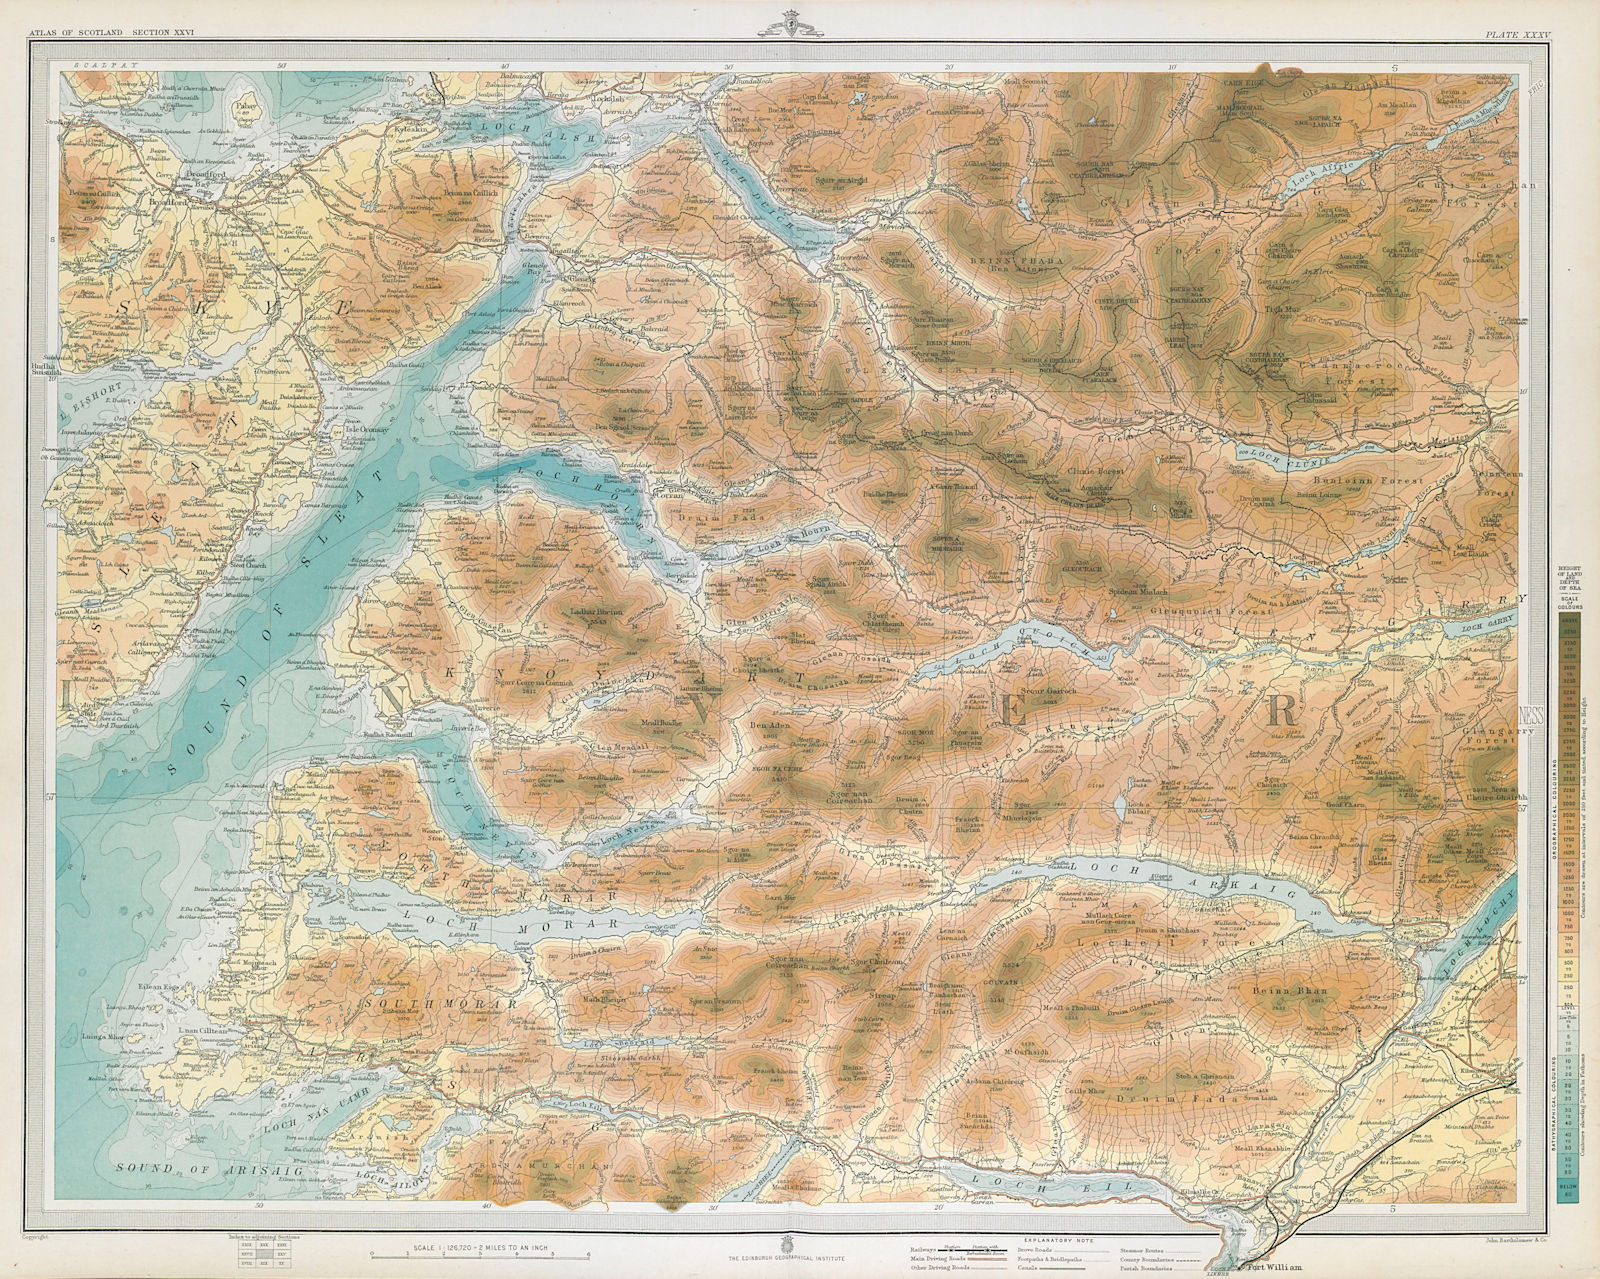 SCOTTISH HIGHLANDS. Invernessshire Fort William Sound of Sleat. LARGE 1895 map